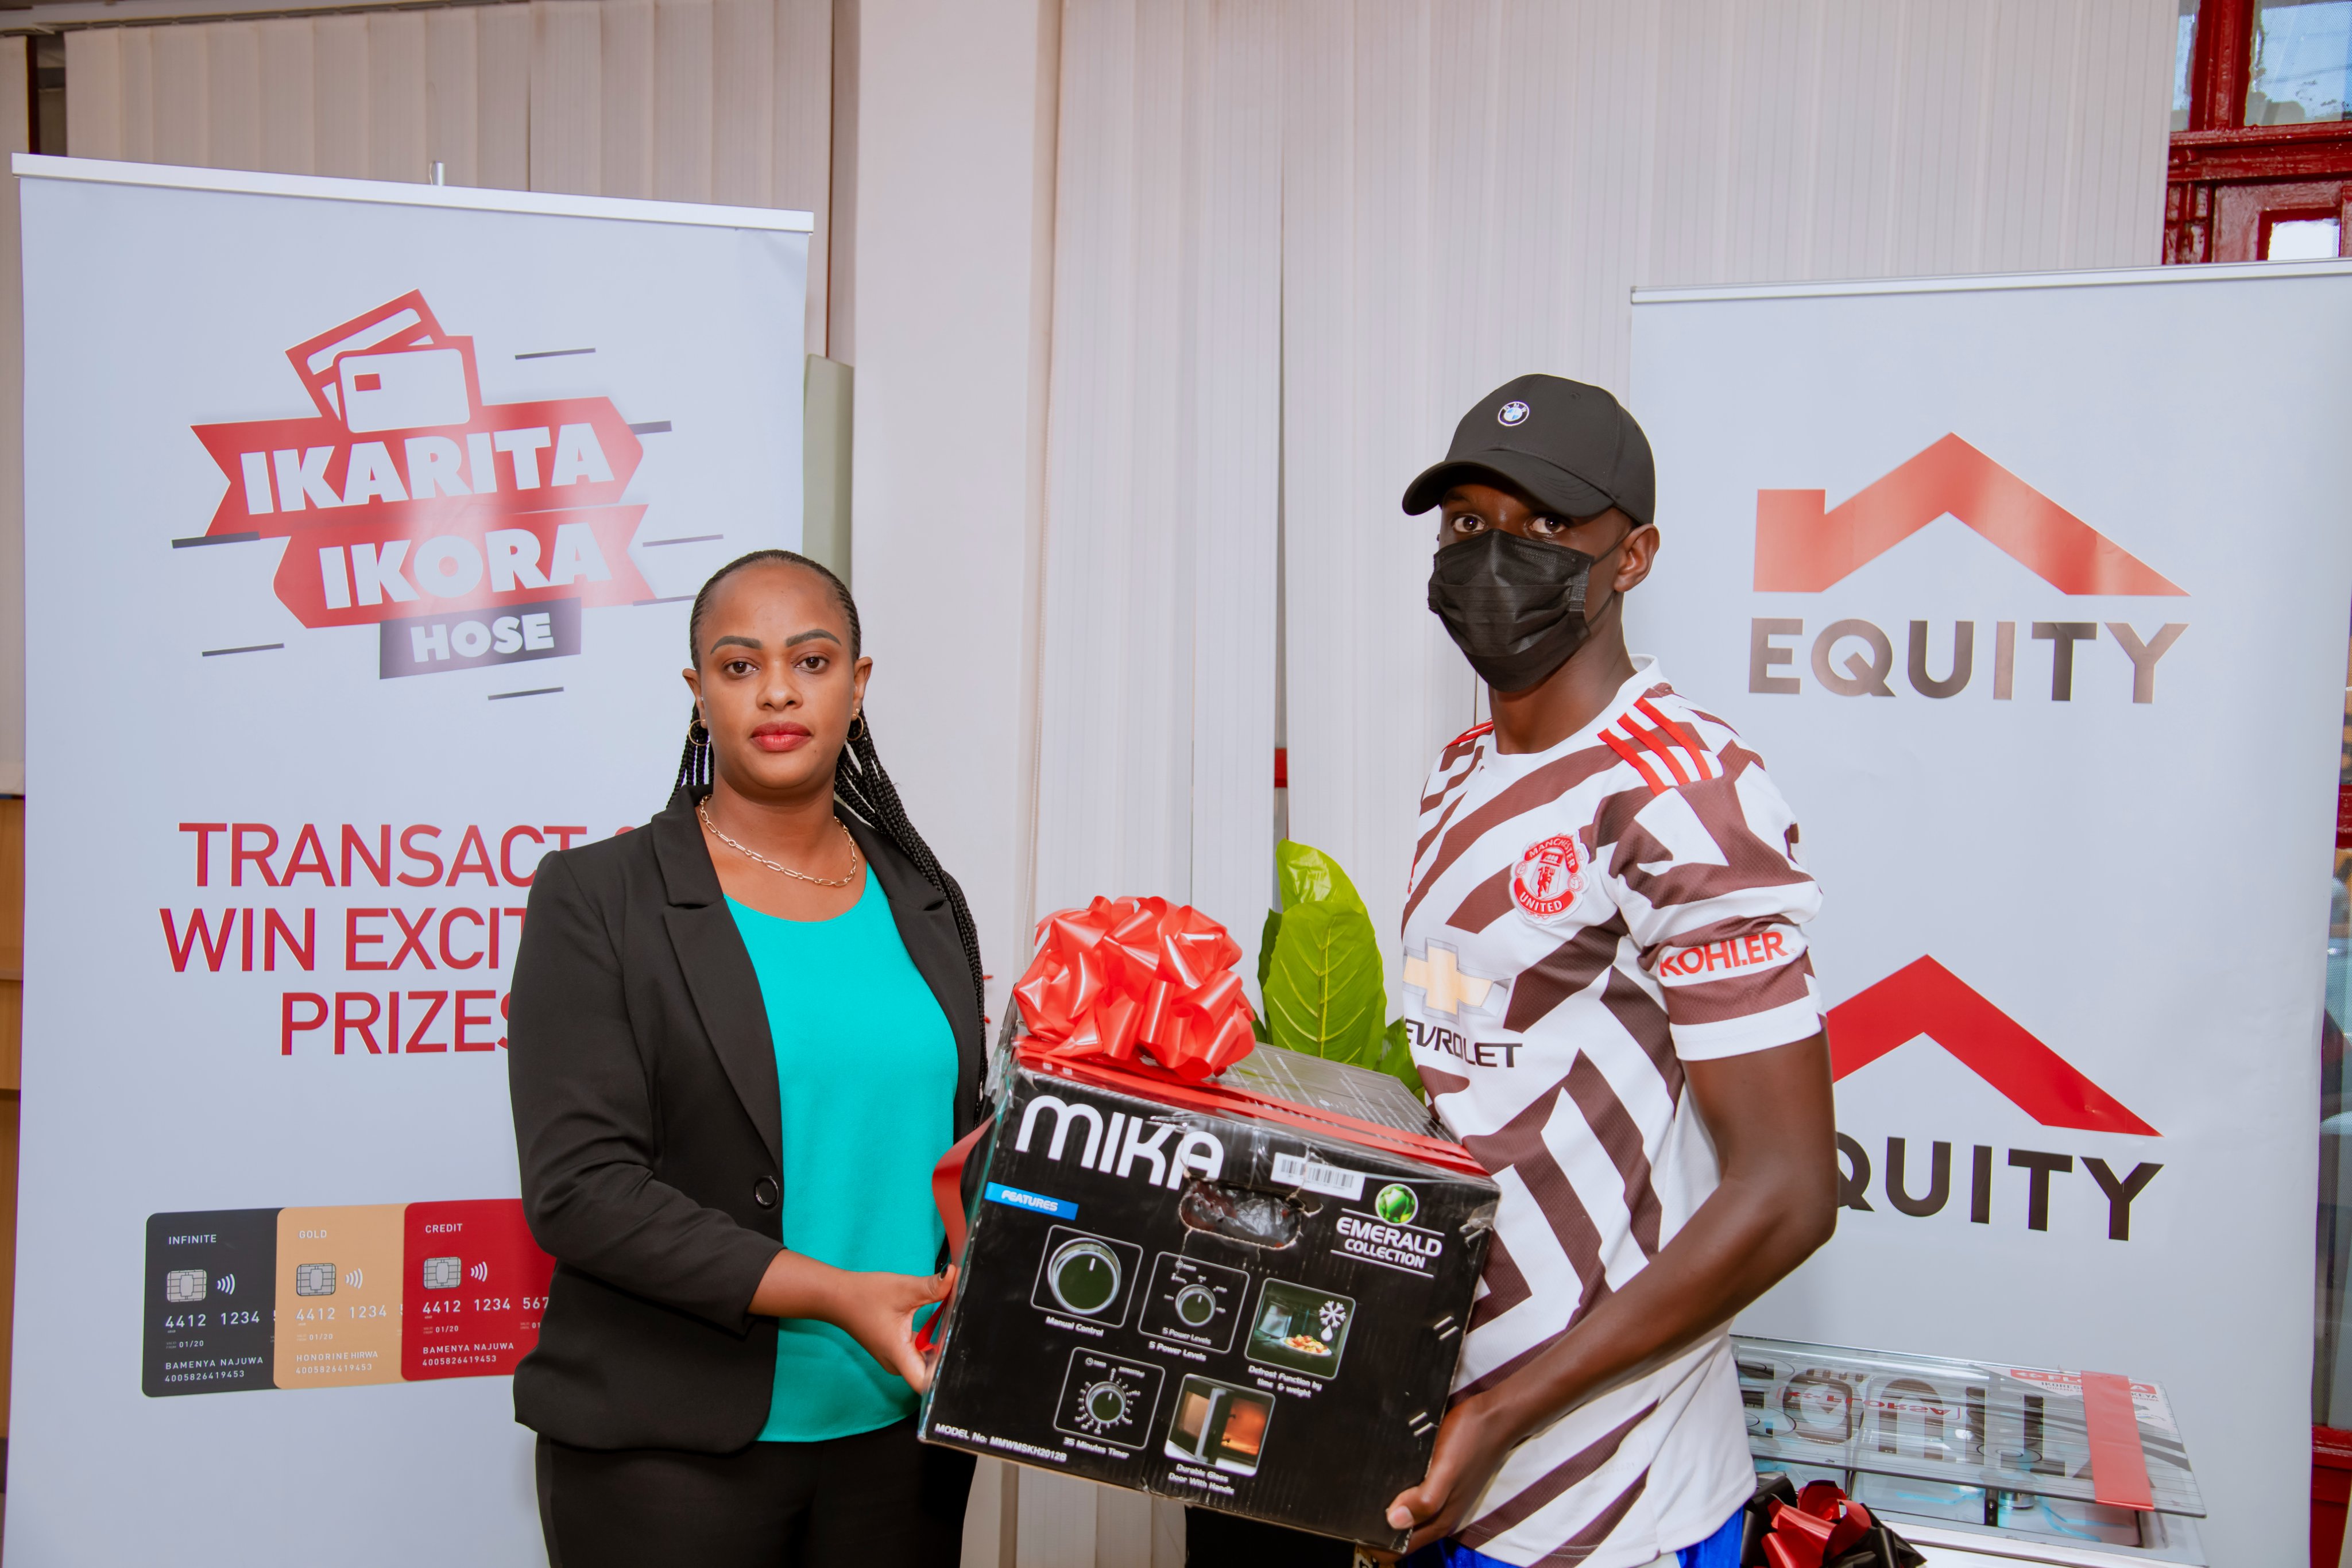 Equity Bank Rwanda Plc has rewarded three winners in the ongoing card usage campaign known as u2018Ikarita Ikora Hose. 